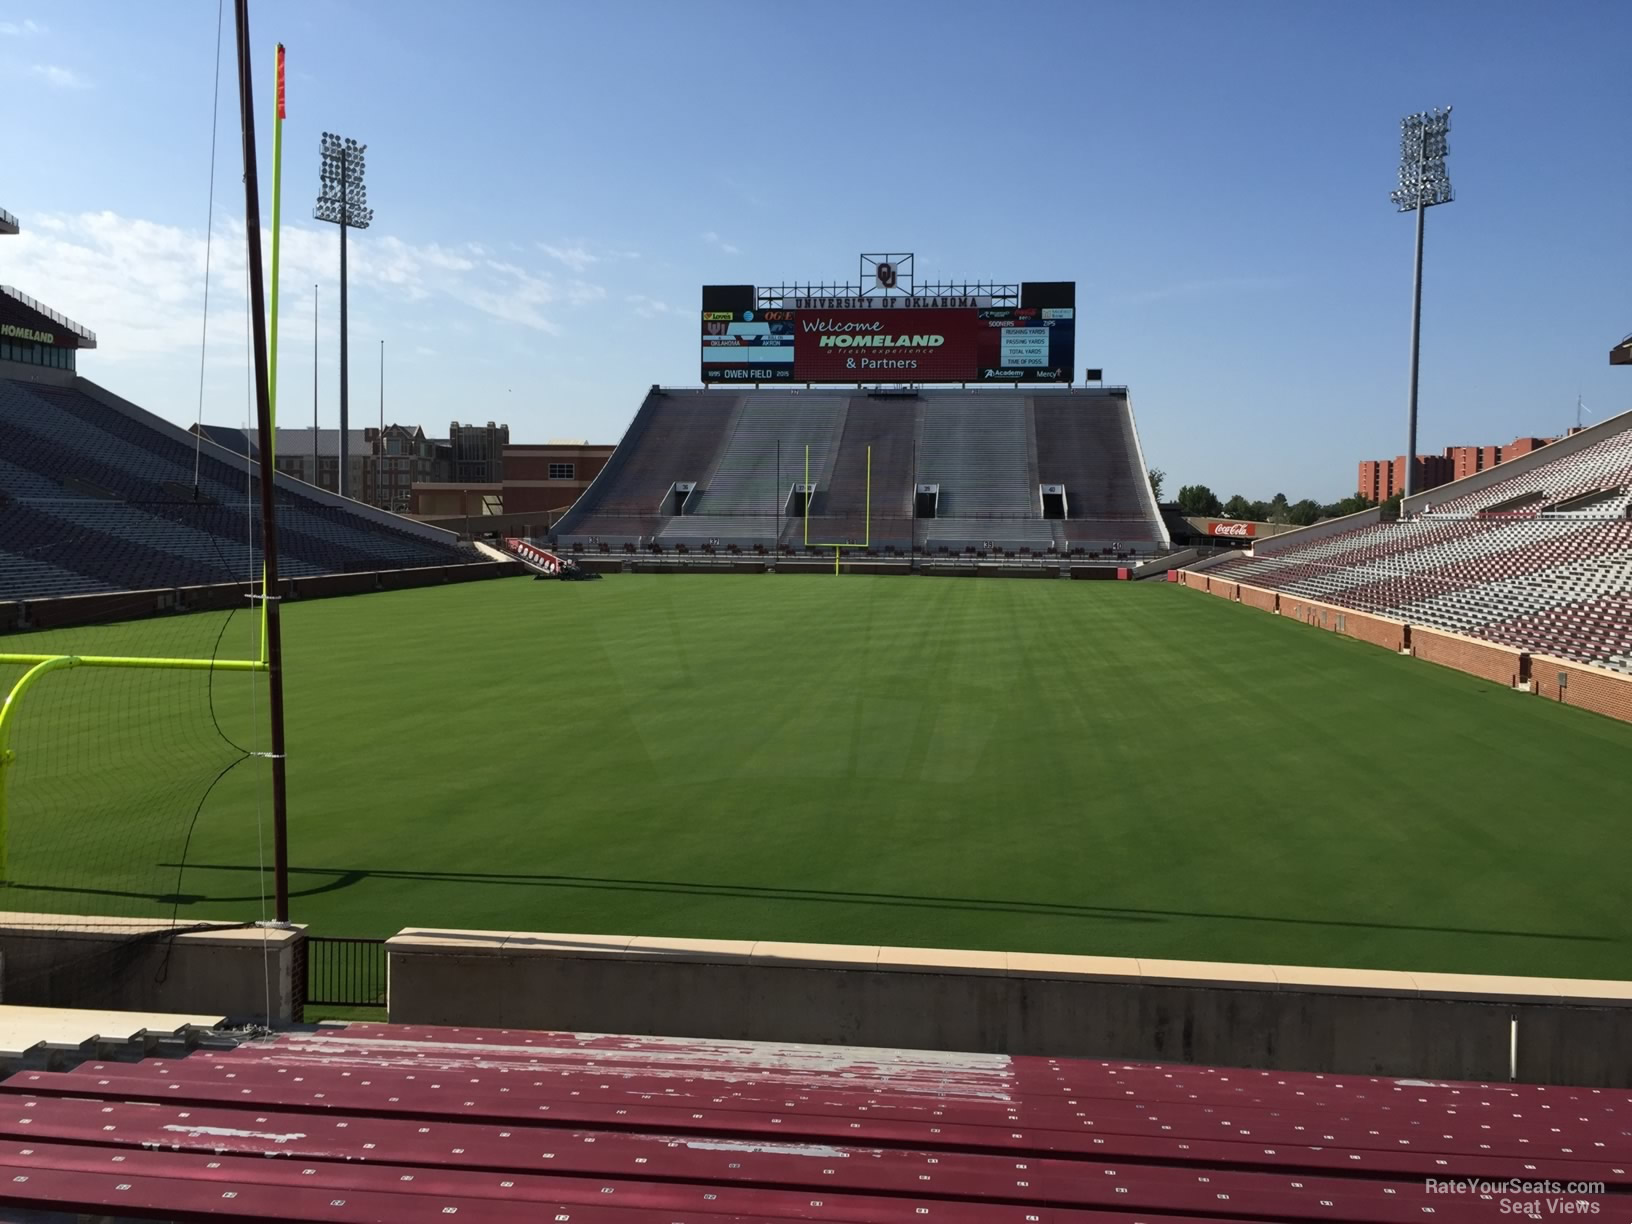 section 17, row 20 seat view  - oklahoma memorial stadium